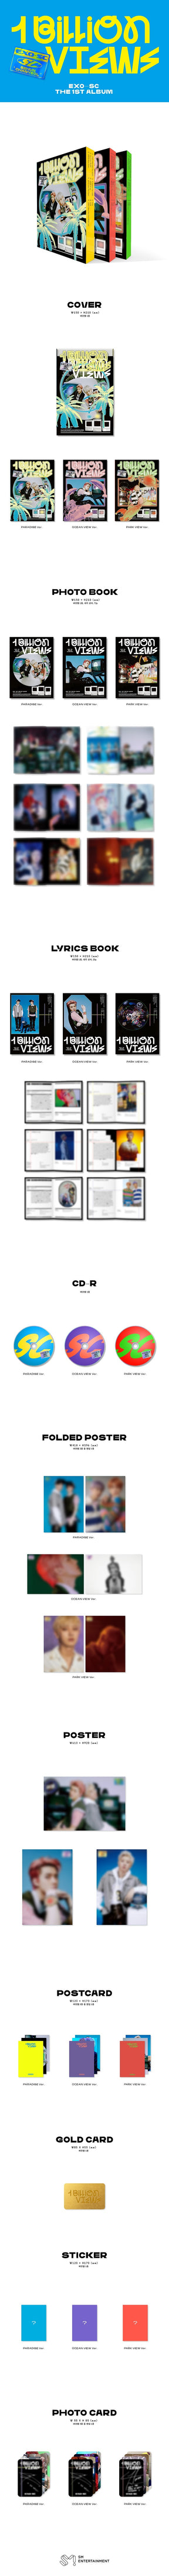 EXO-SC Vol. 1 - 1 Billion Views